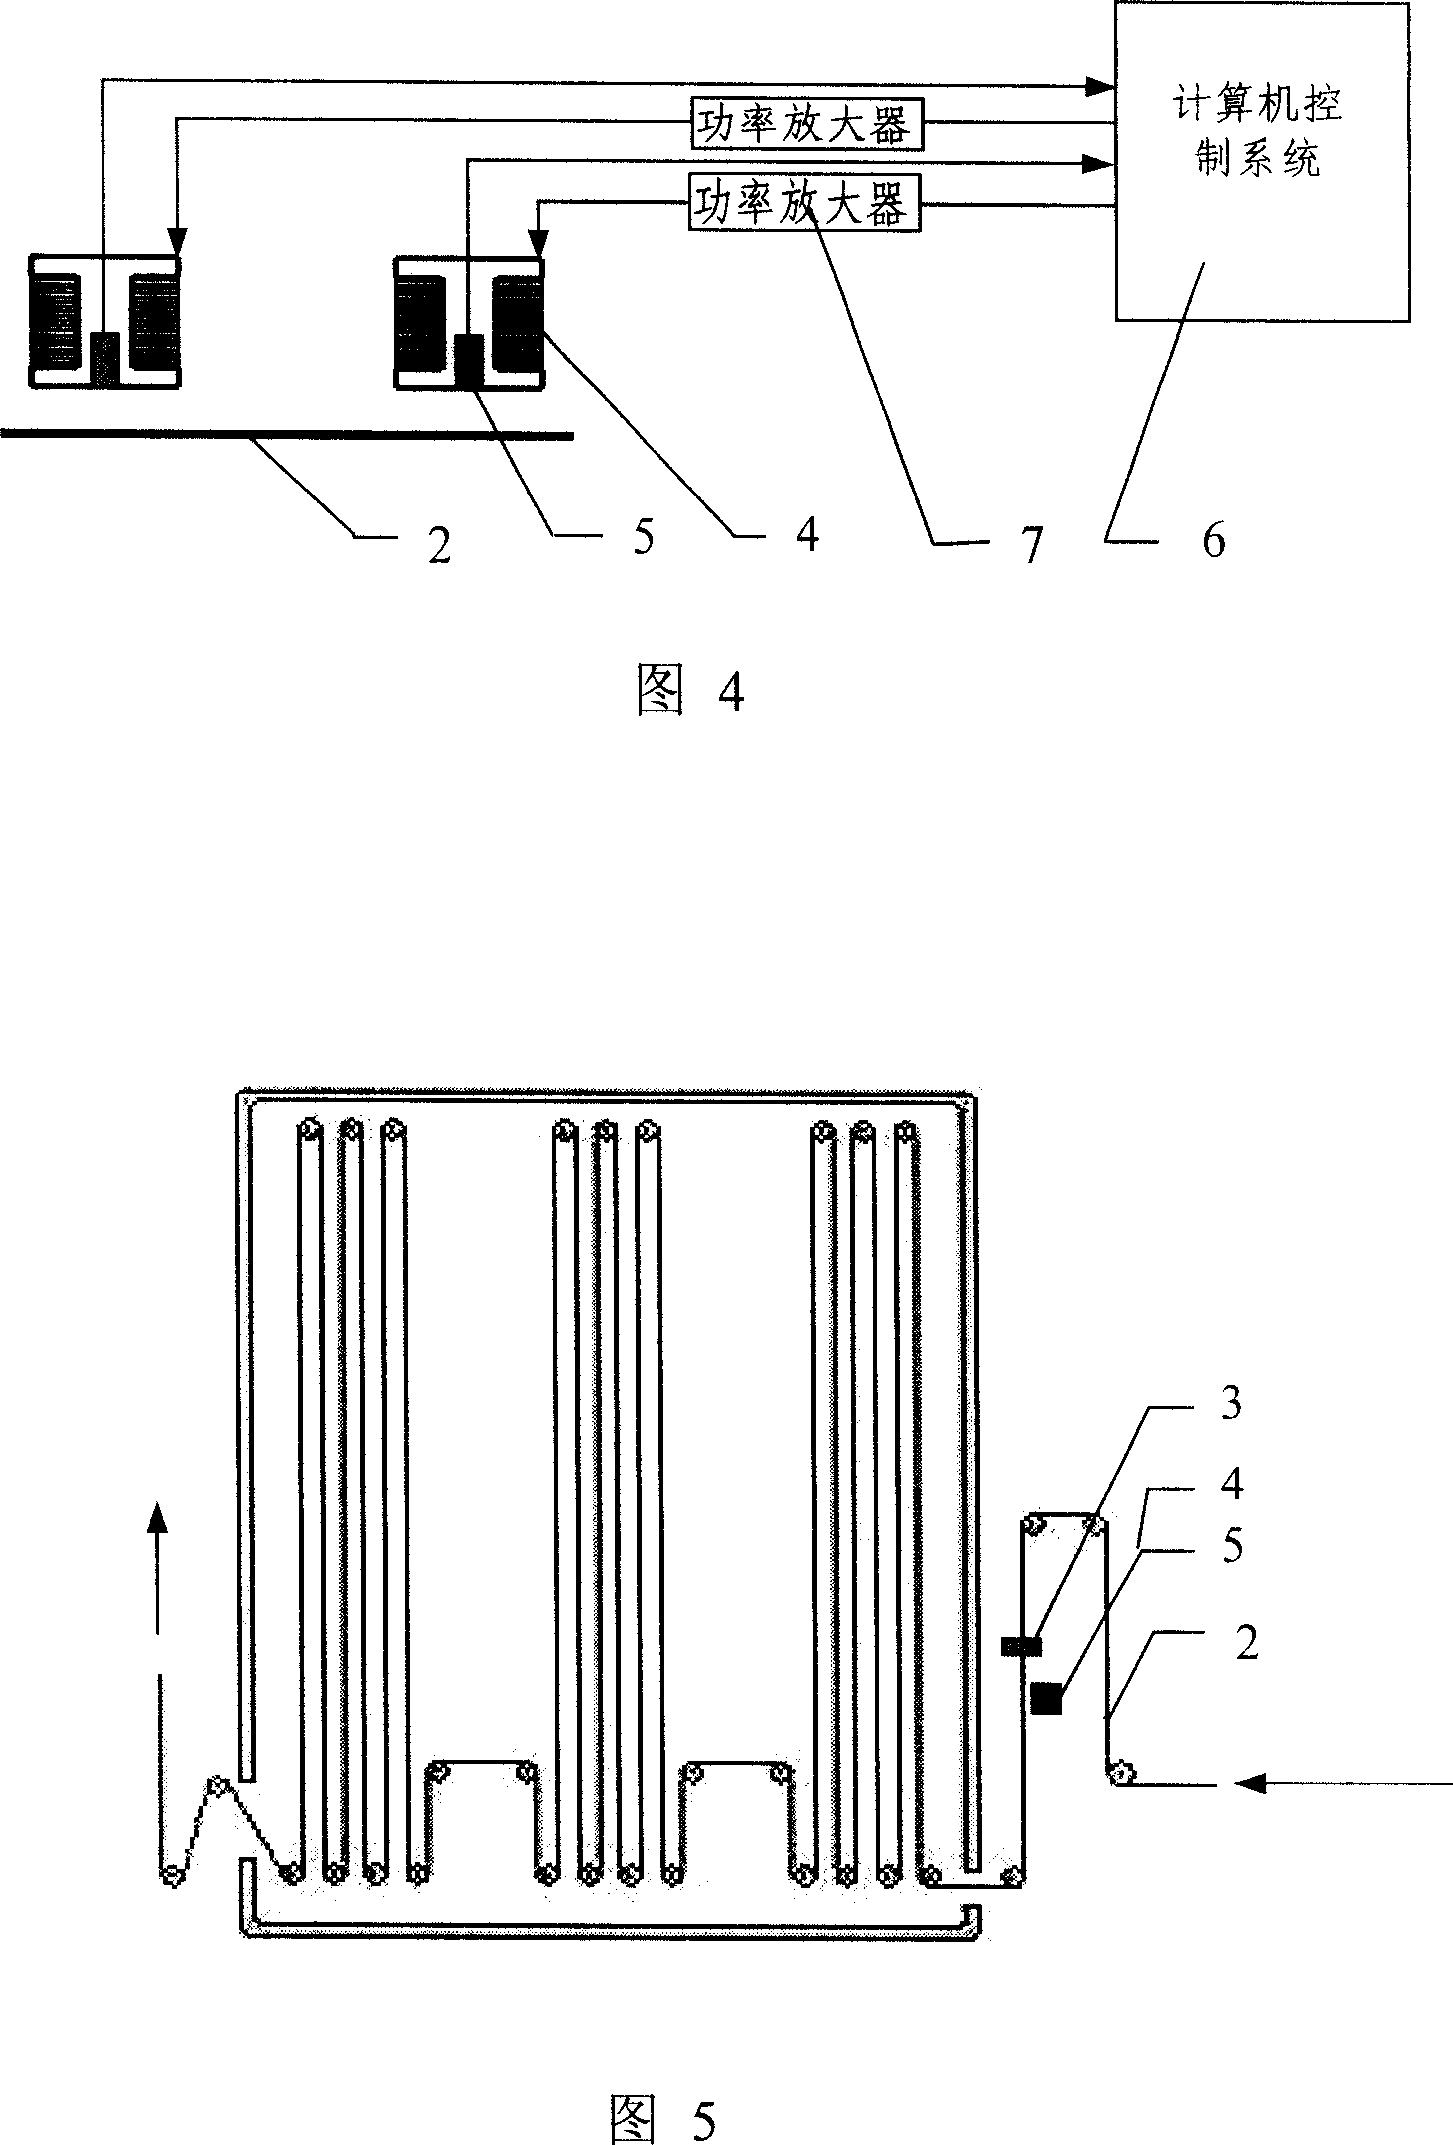 Strip steel non-roller correcting error method and apparatus